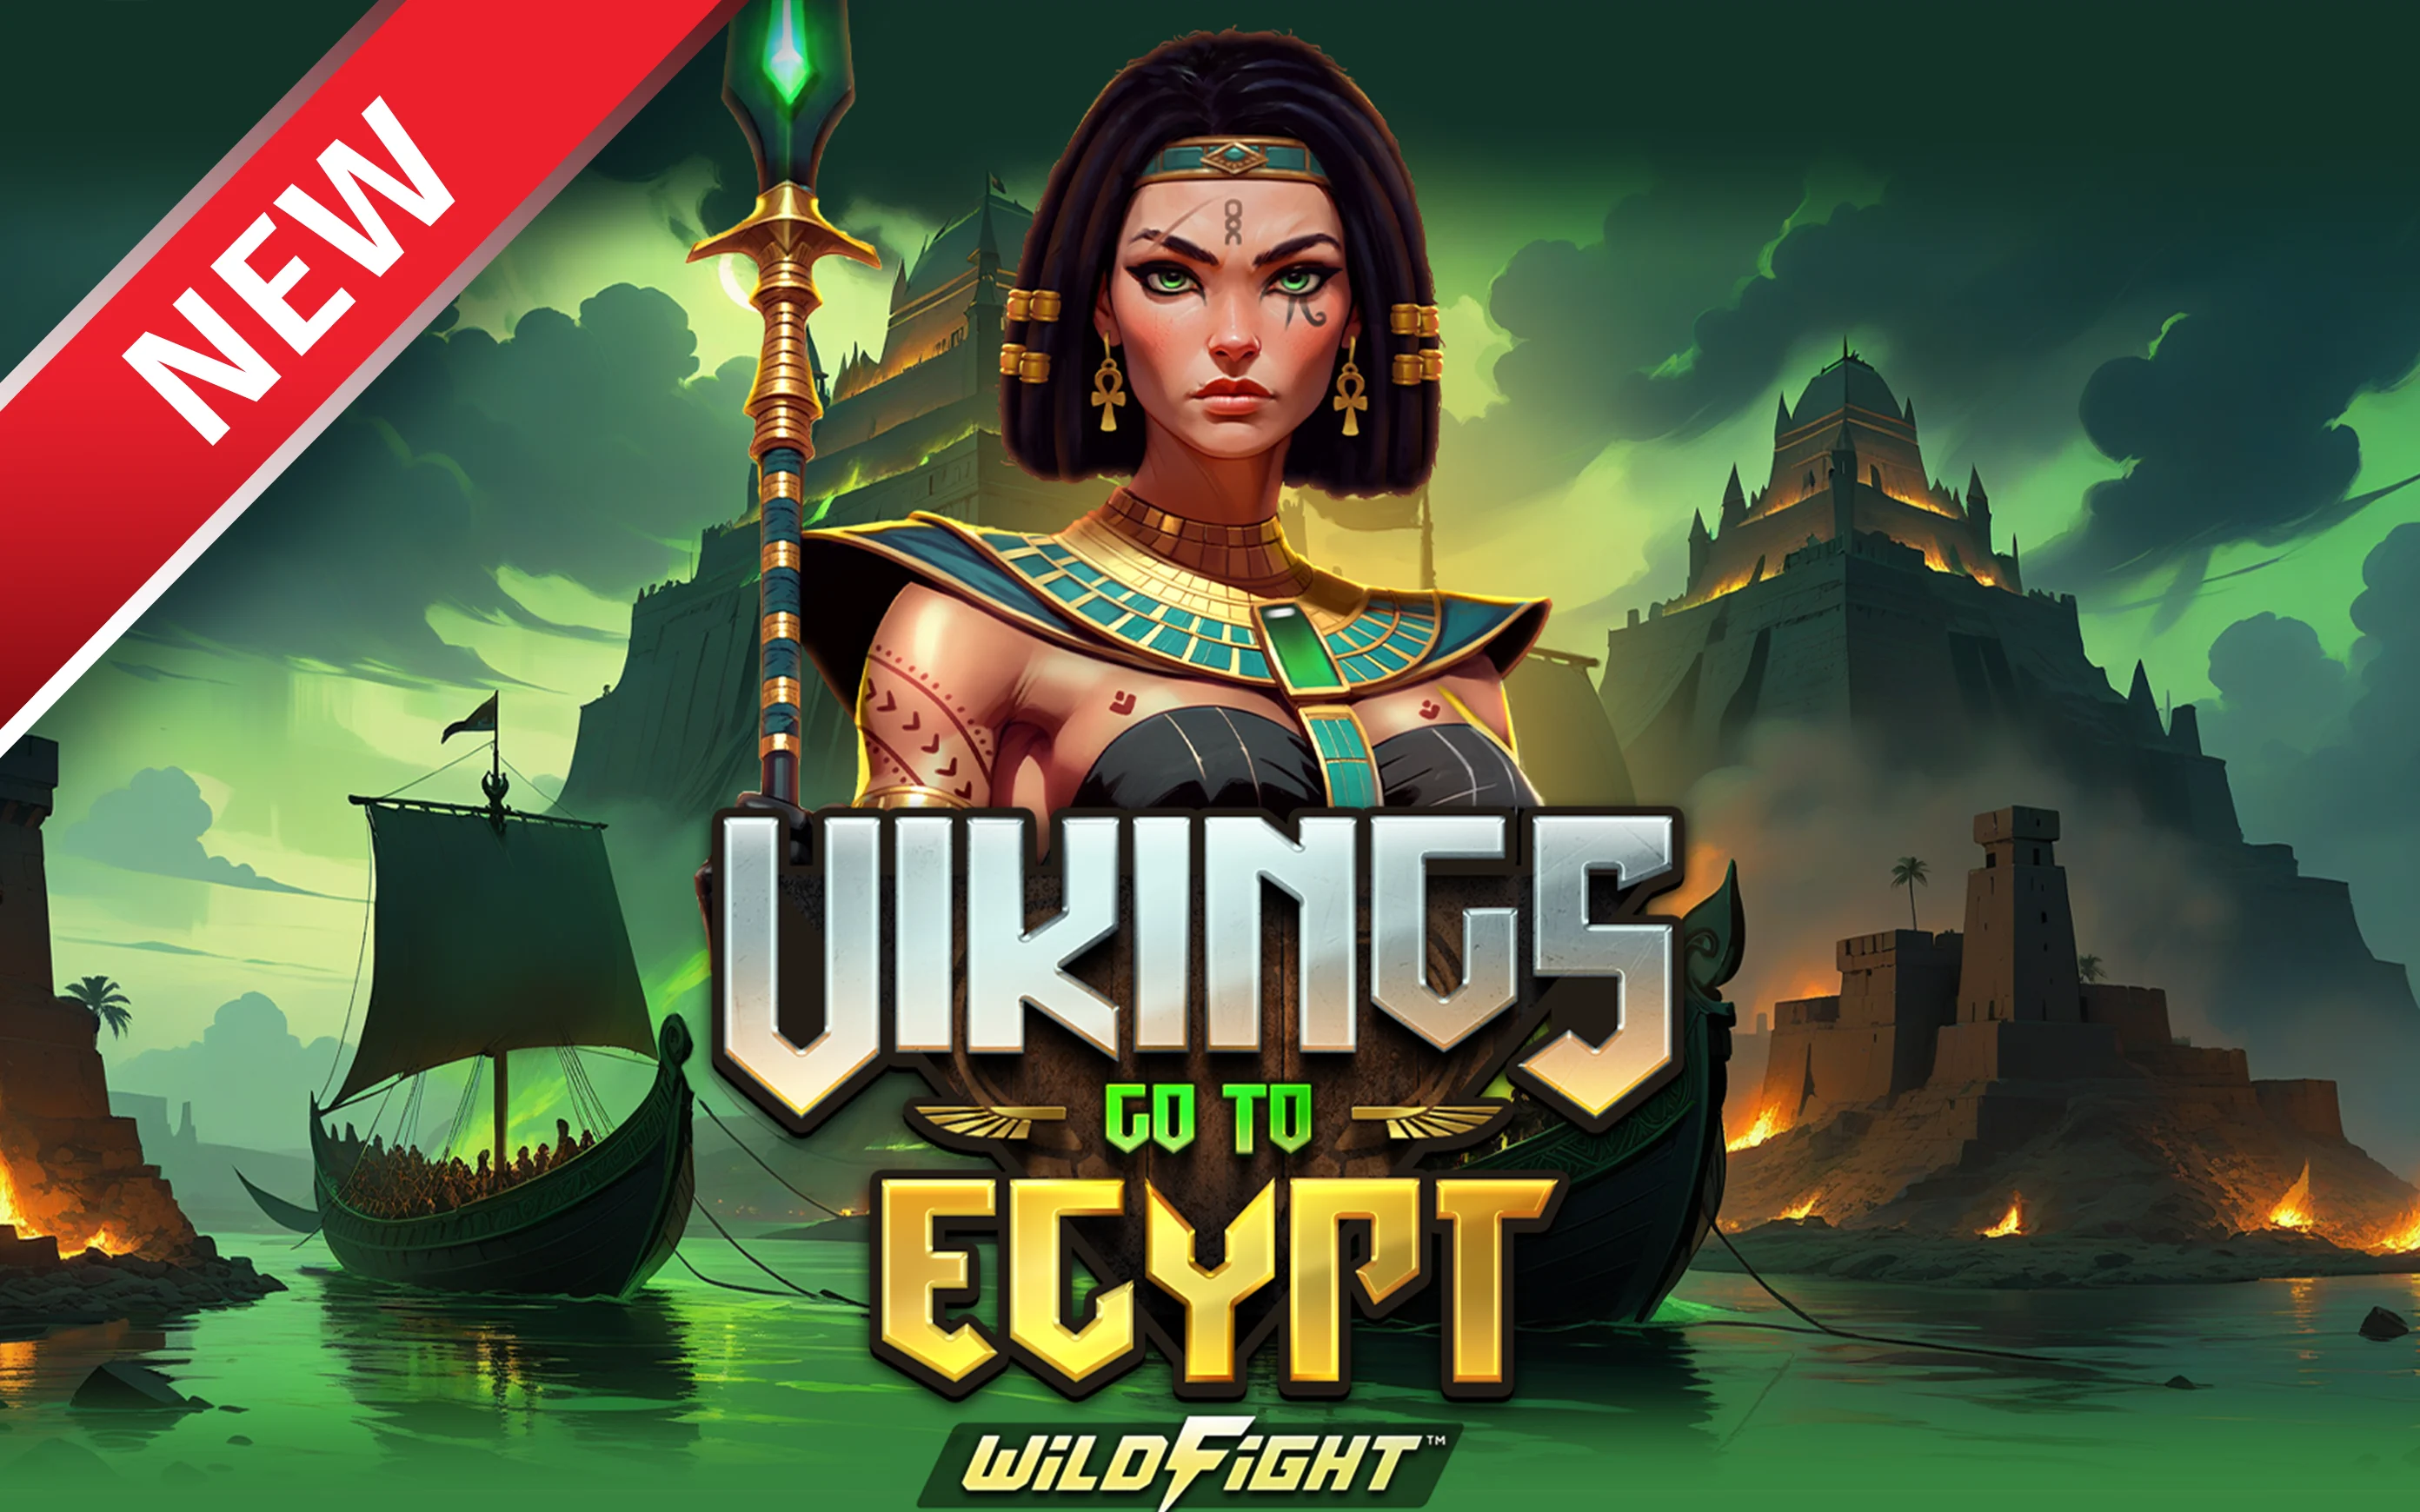 Грайте у Vikings Go To Egypt Wild Fight!™ в онлайн-казино Starcasino.be